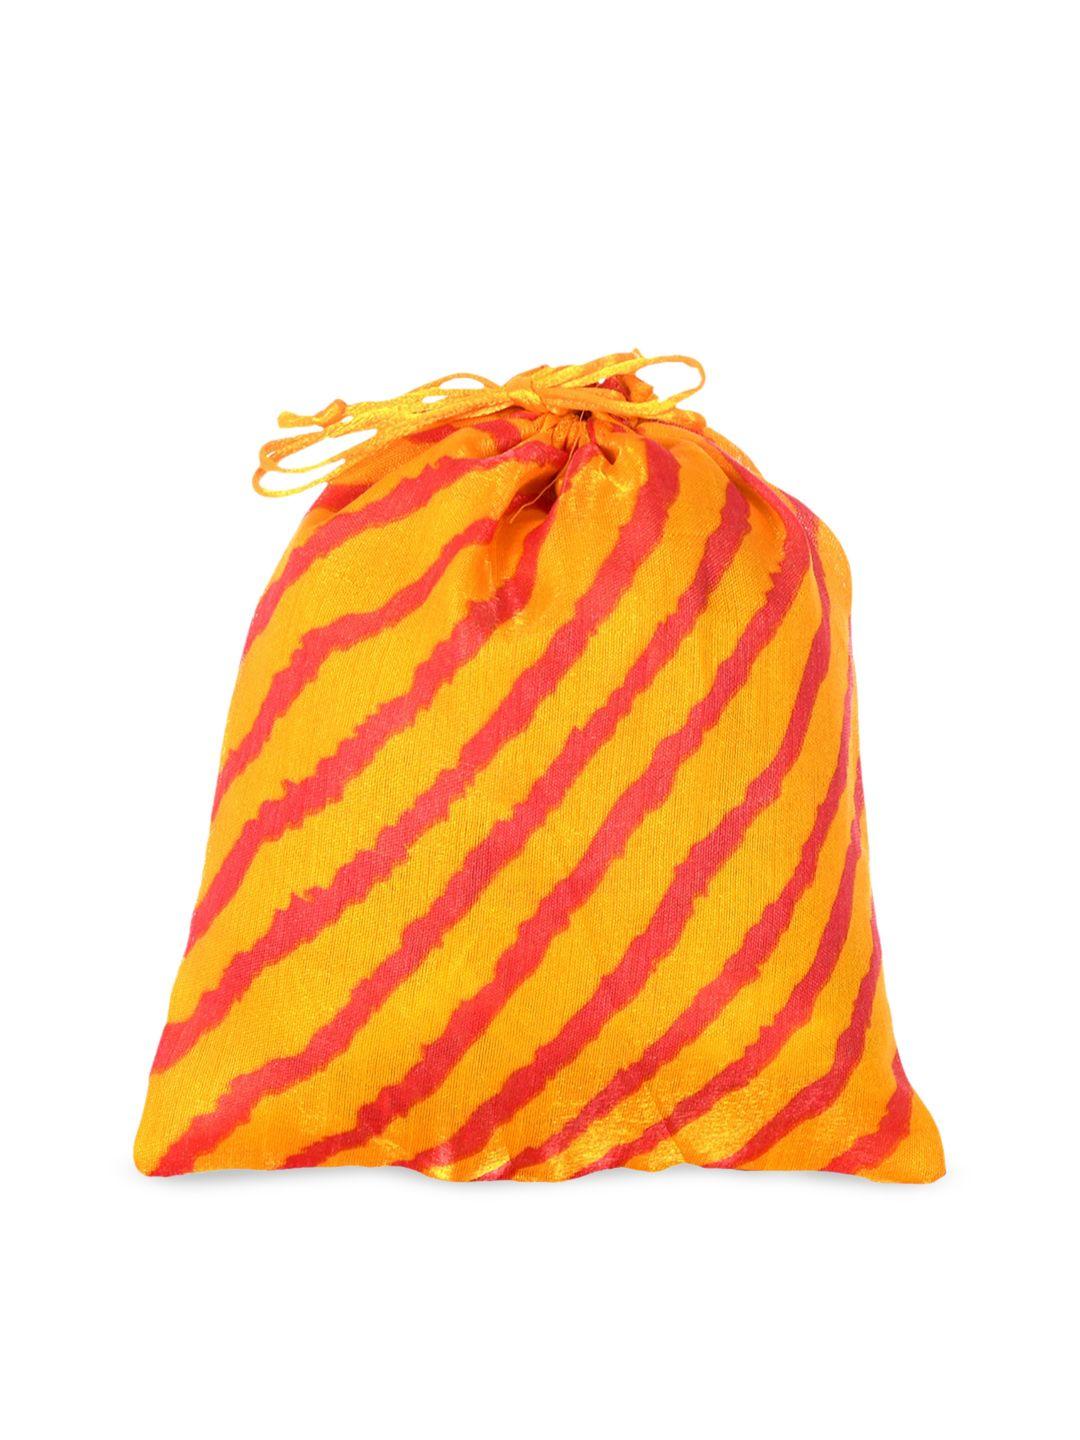 kuber industries yellow bucket sling bag